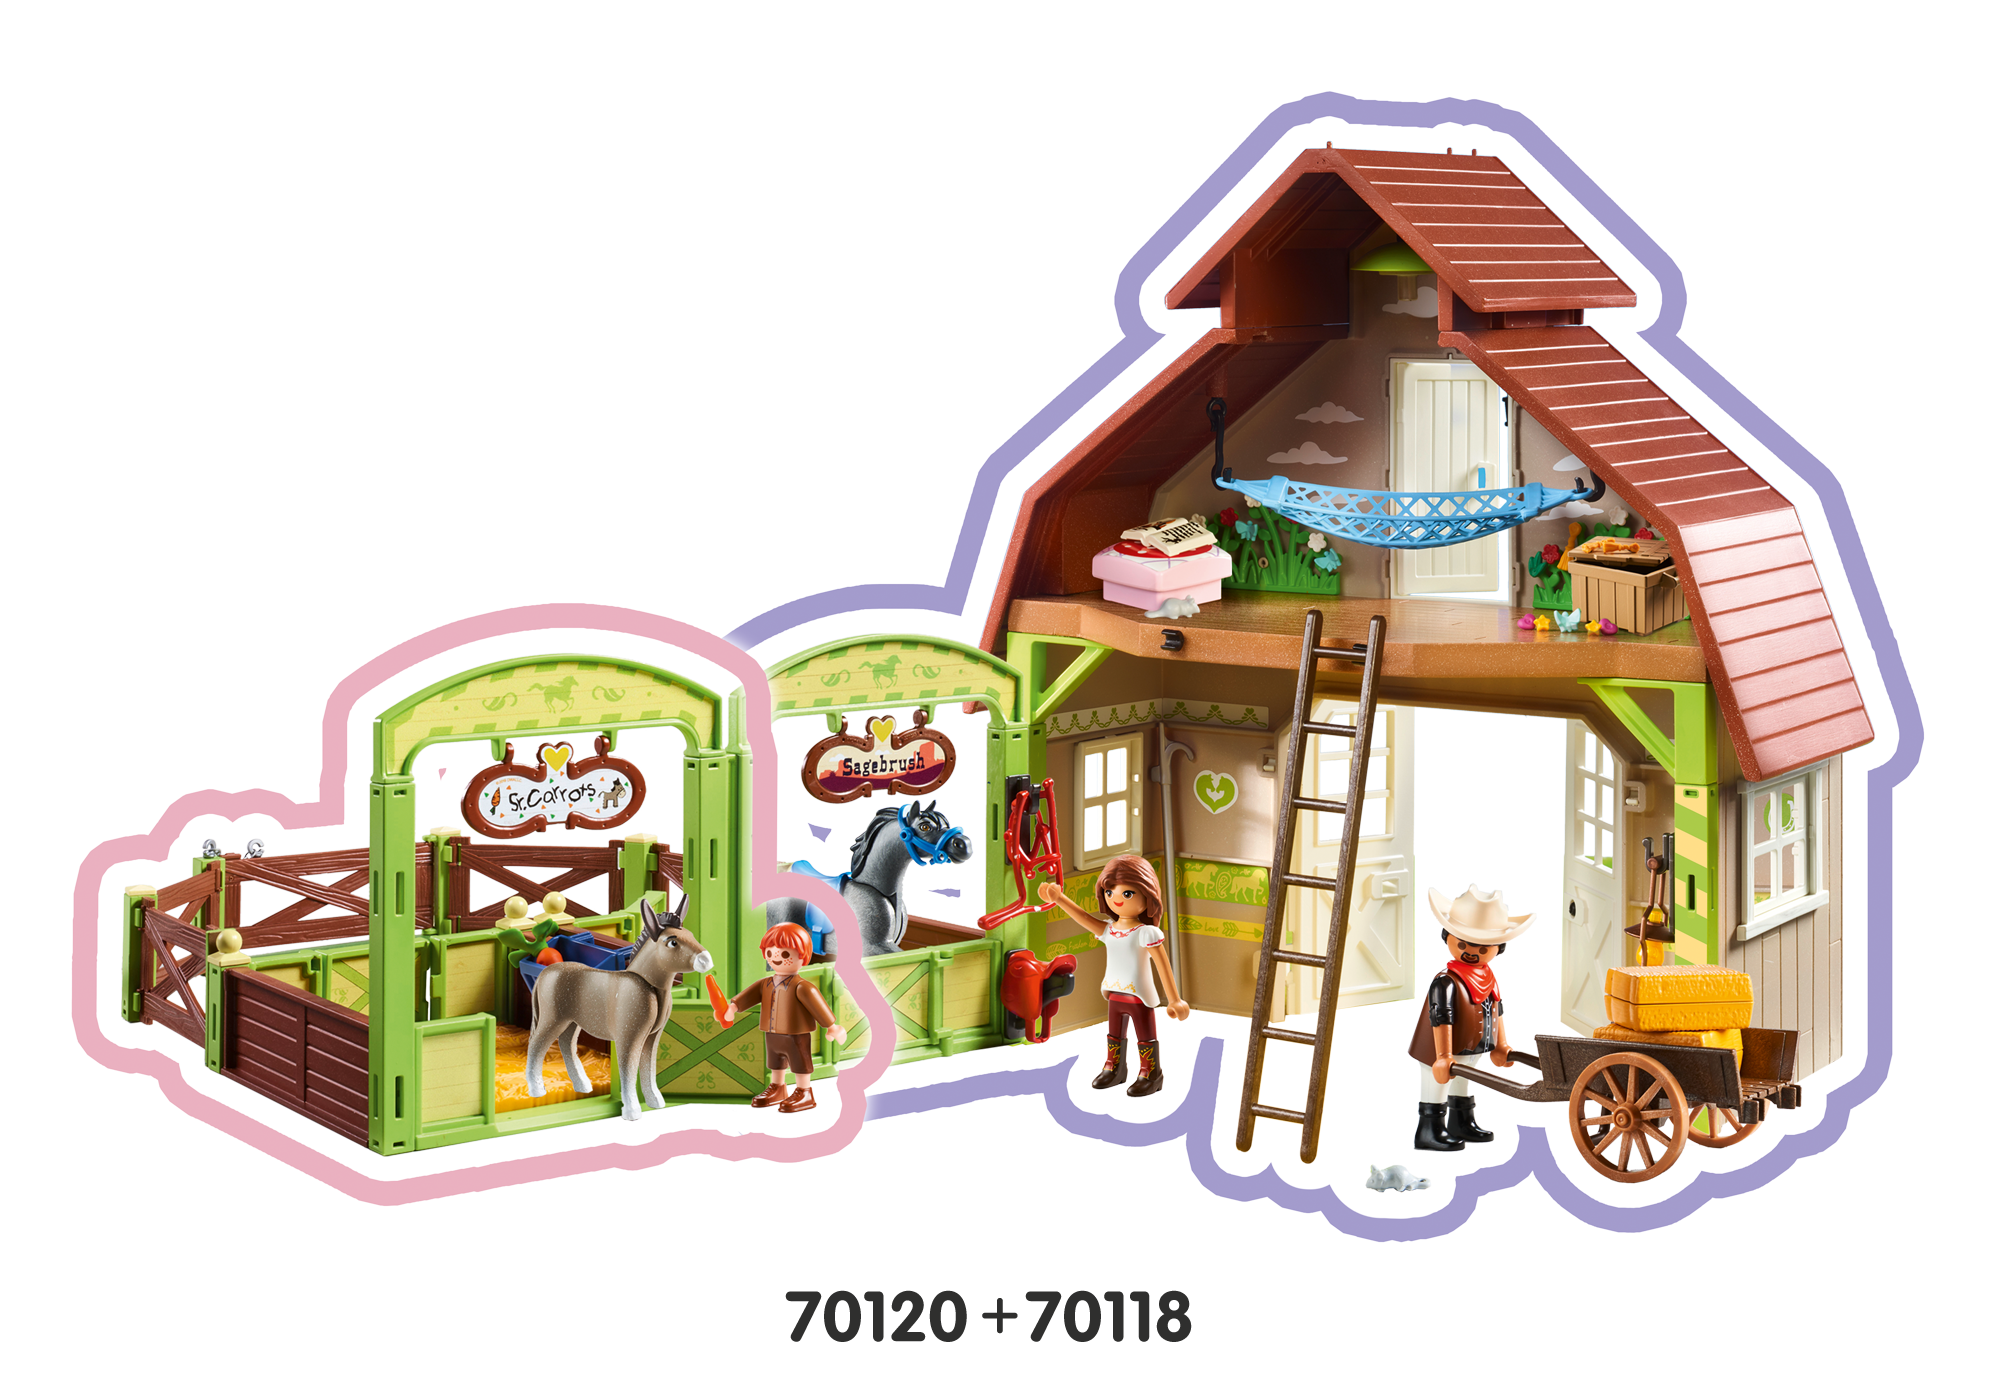 spirit playmobil barn